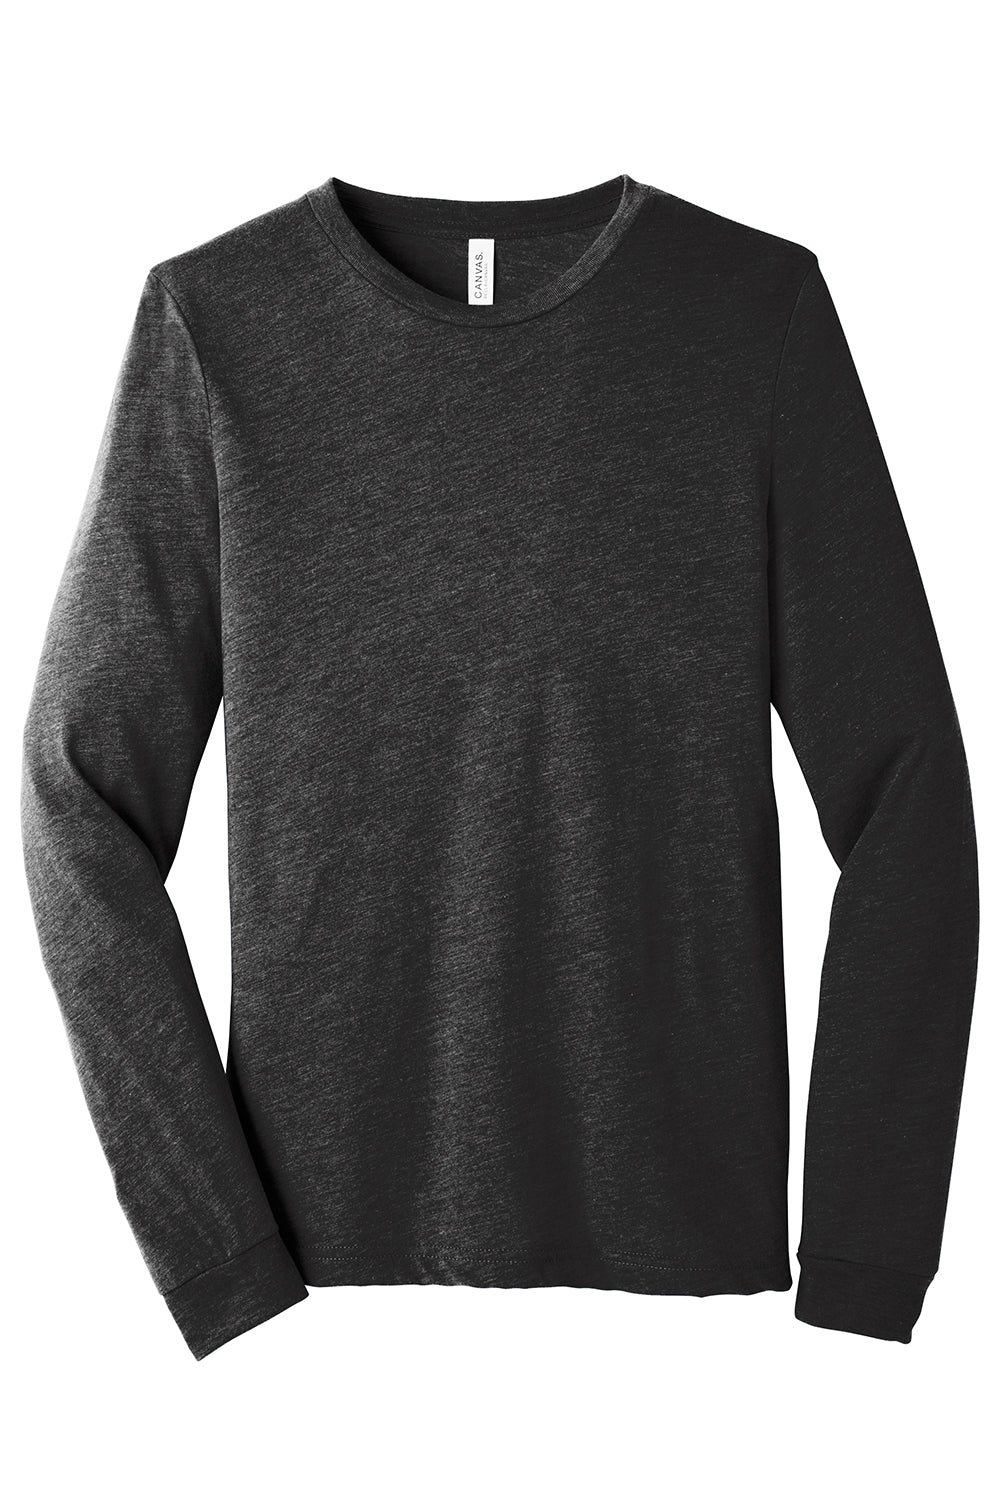 Bella + Canvas BC3501/3501 Mens Jersey Long Sleeve Crewneck T-Shirt Charcoal Black Triblend Flat Front